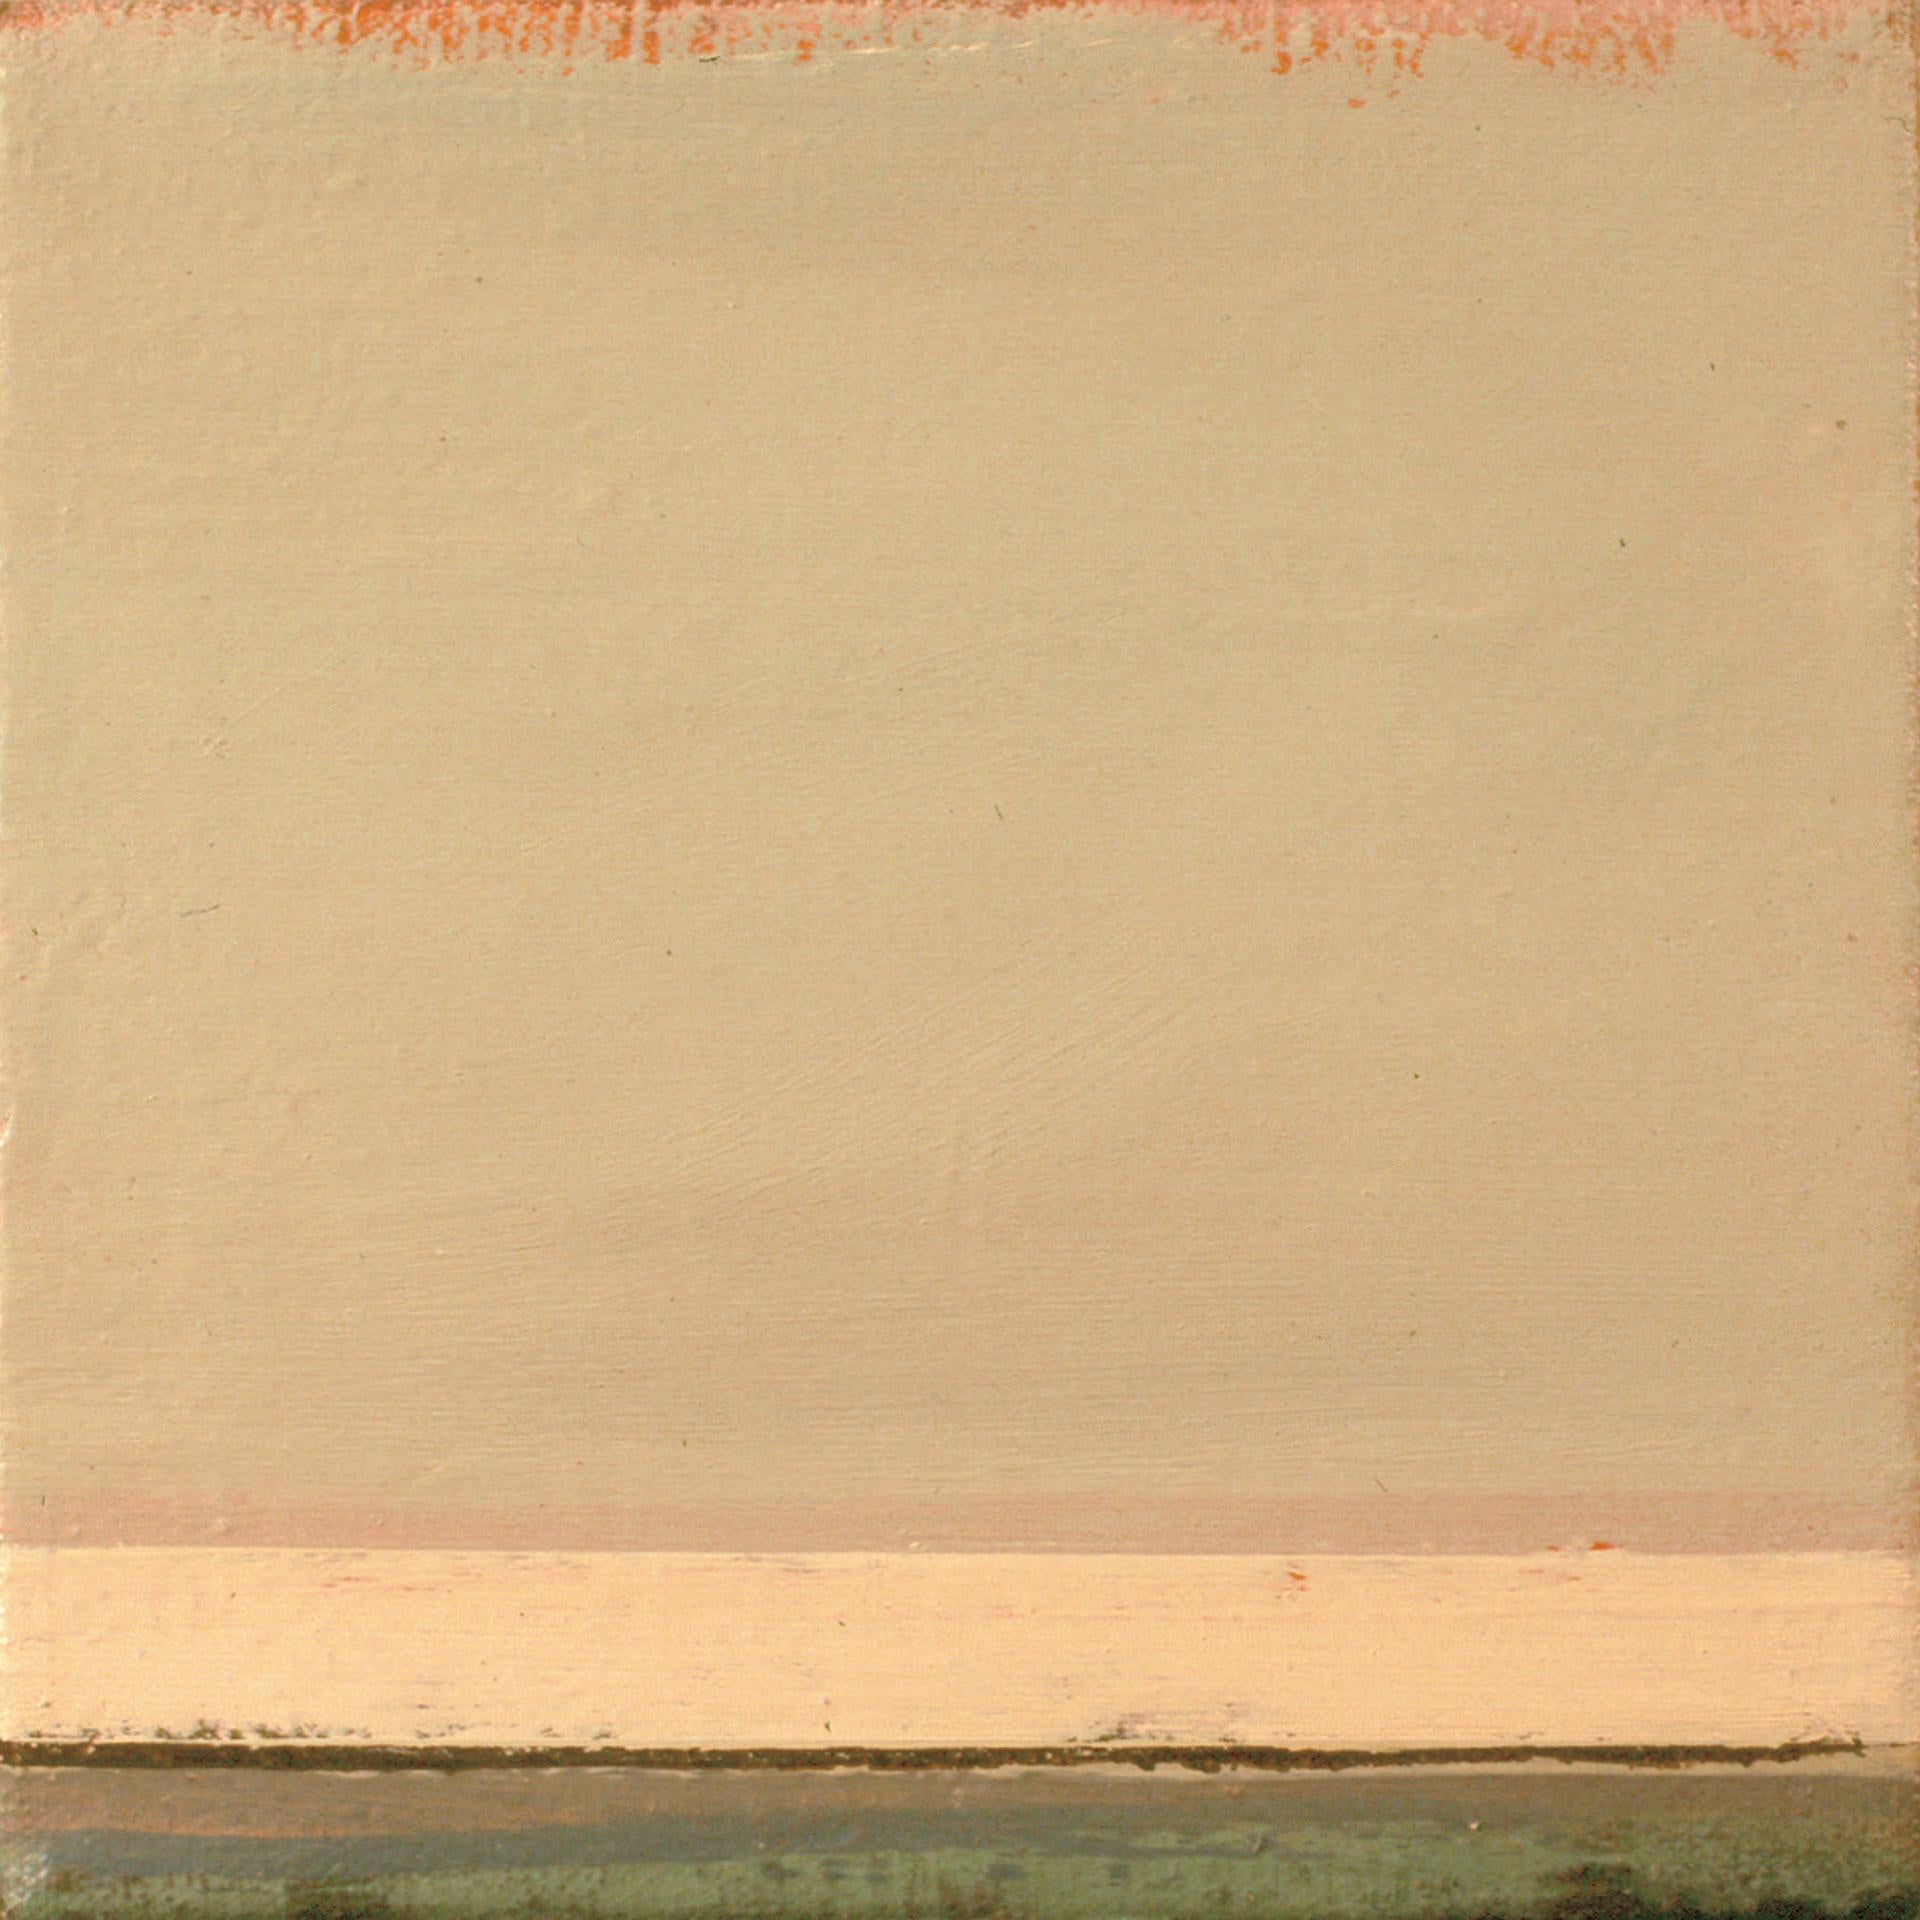 Alyson Kinkade Landscape Painting - Remembering Plains no. 1